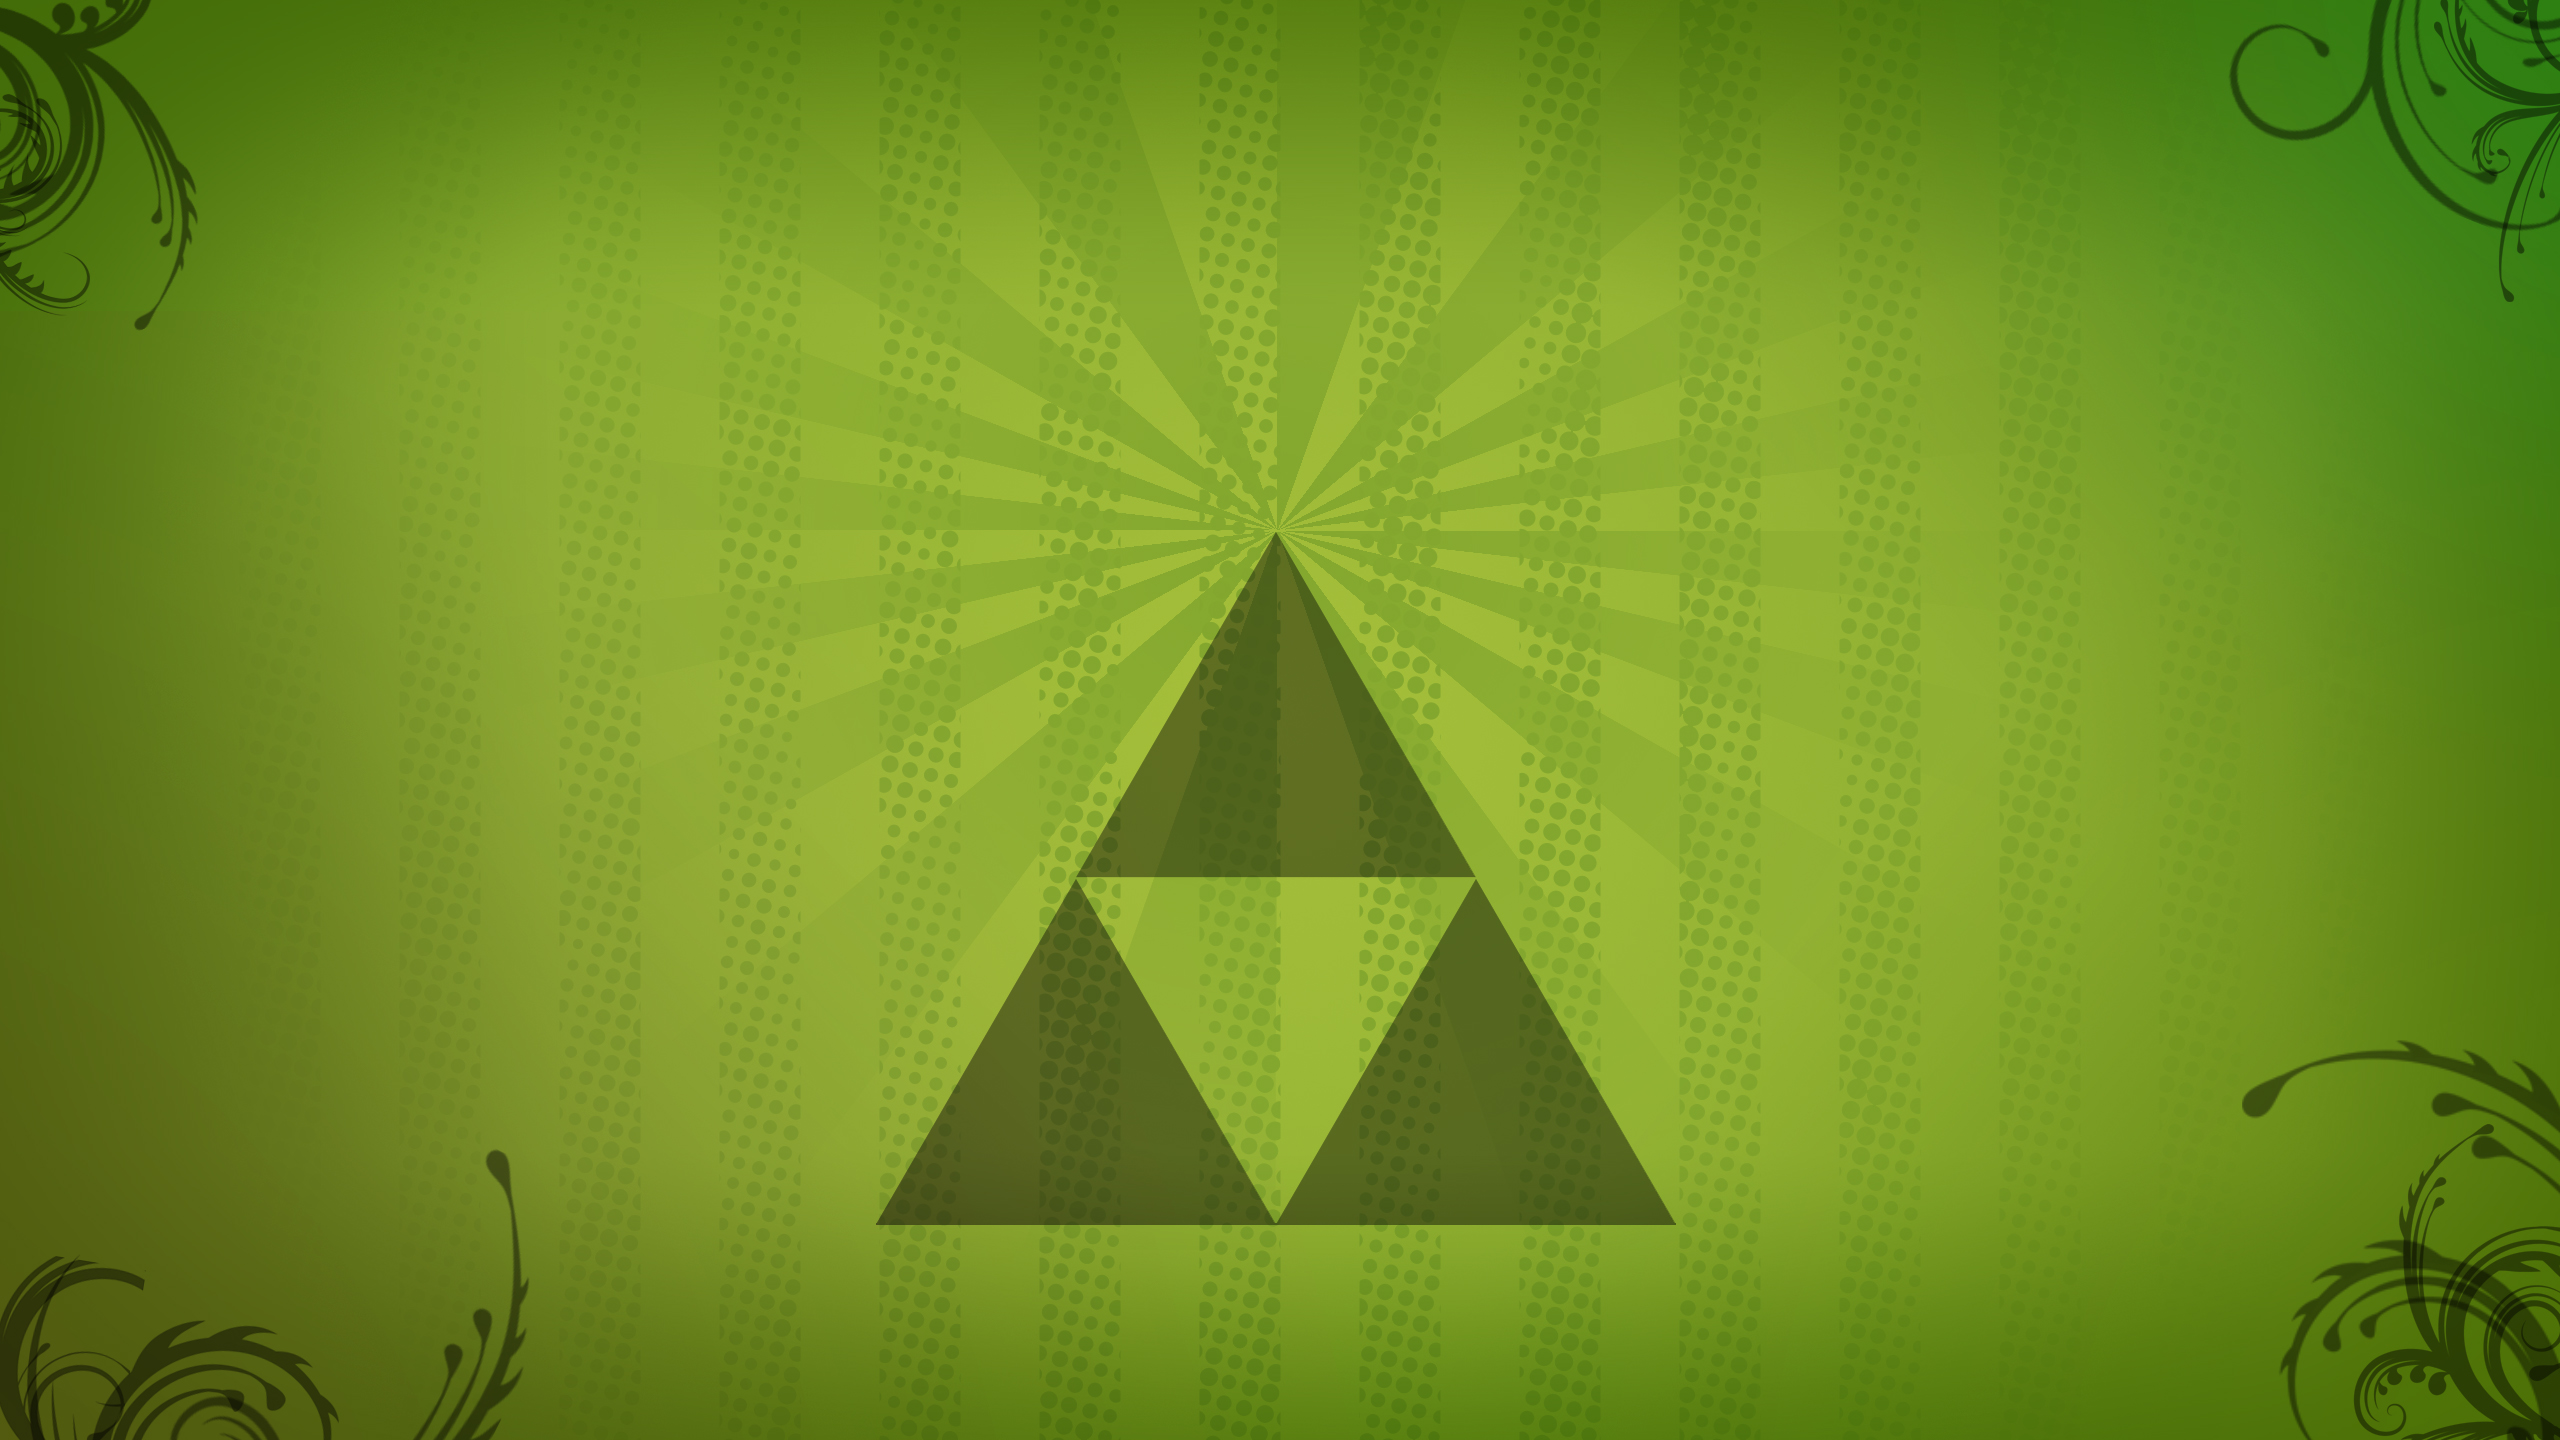 Zelda Triforce Wallpaper Minimalistic By H Thomson On